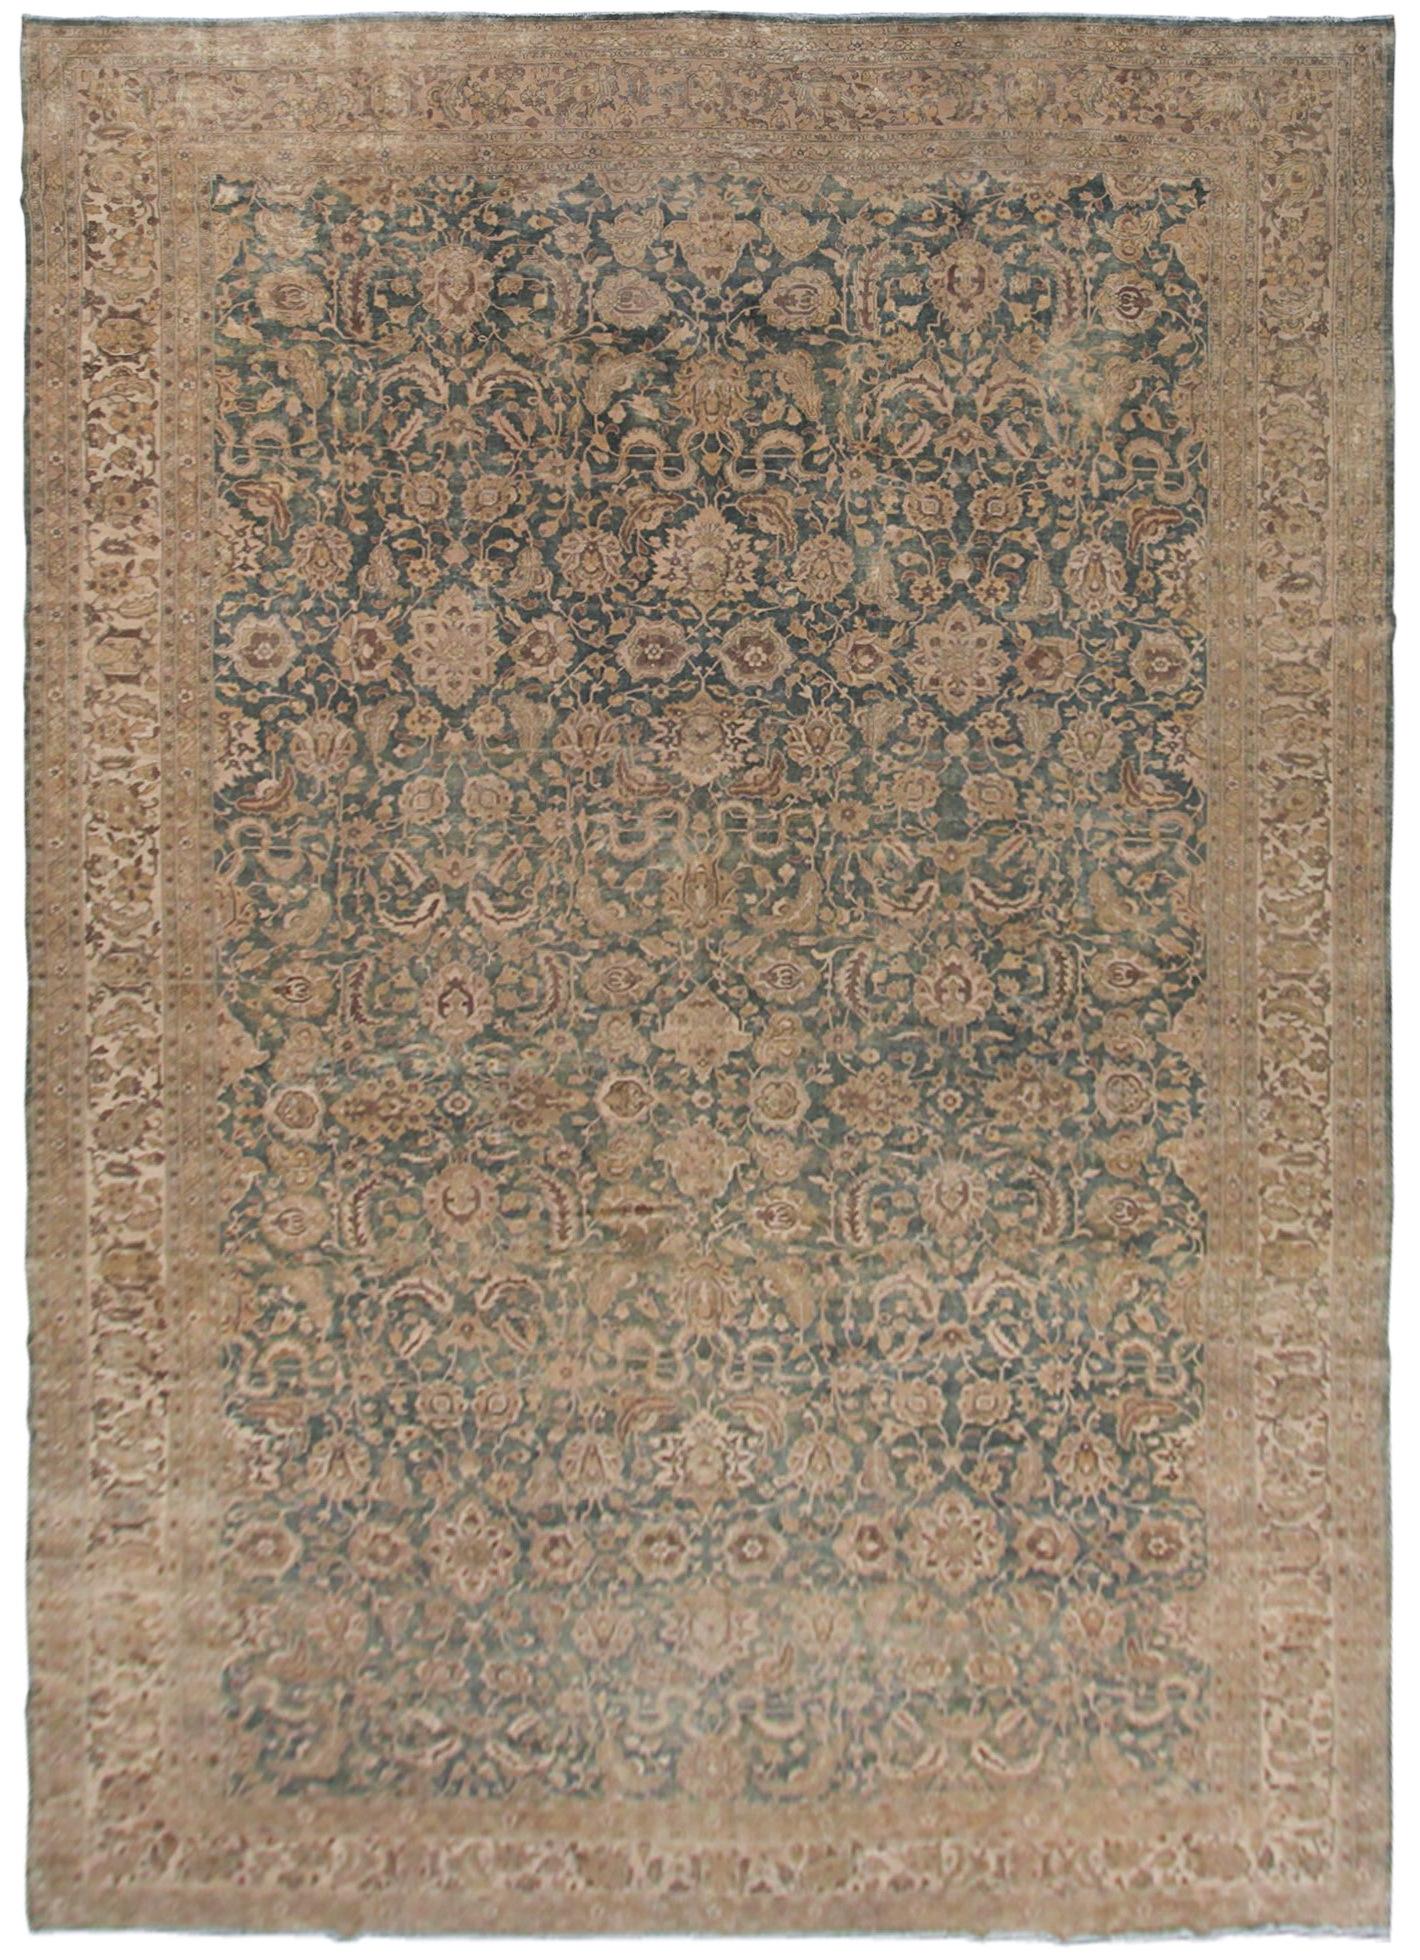 Large Antique Haji Jalili Rug Antique Persian Rug Geometric Overall 1890 2